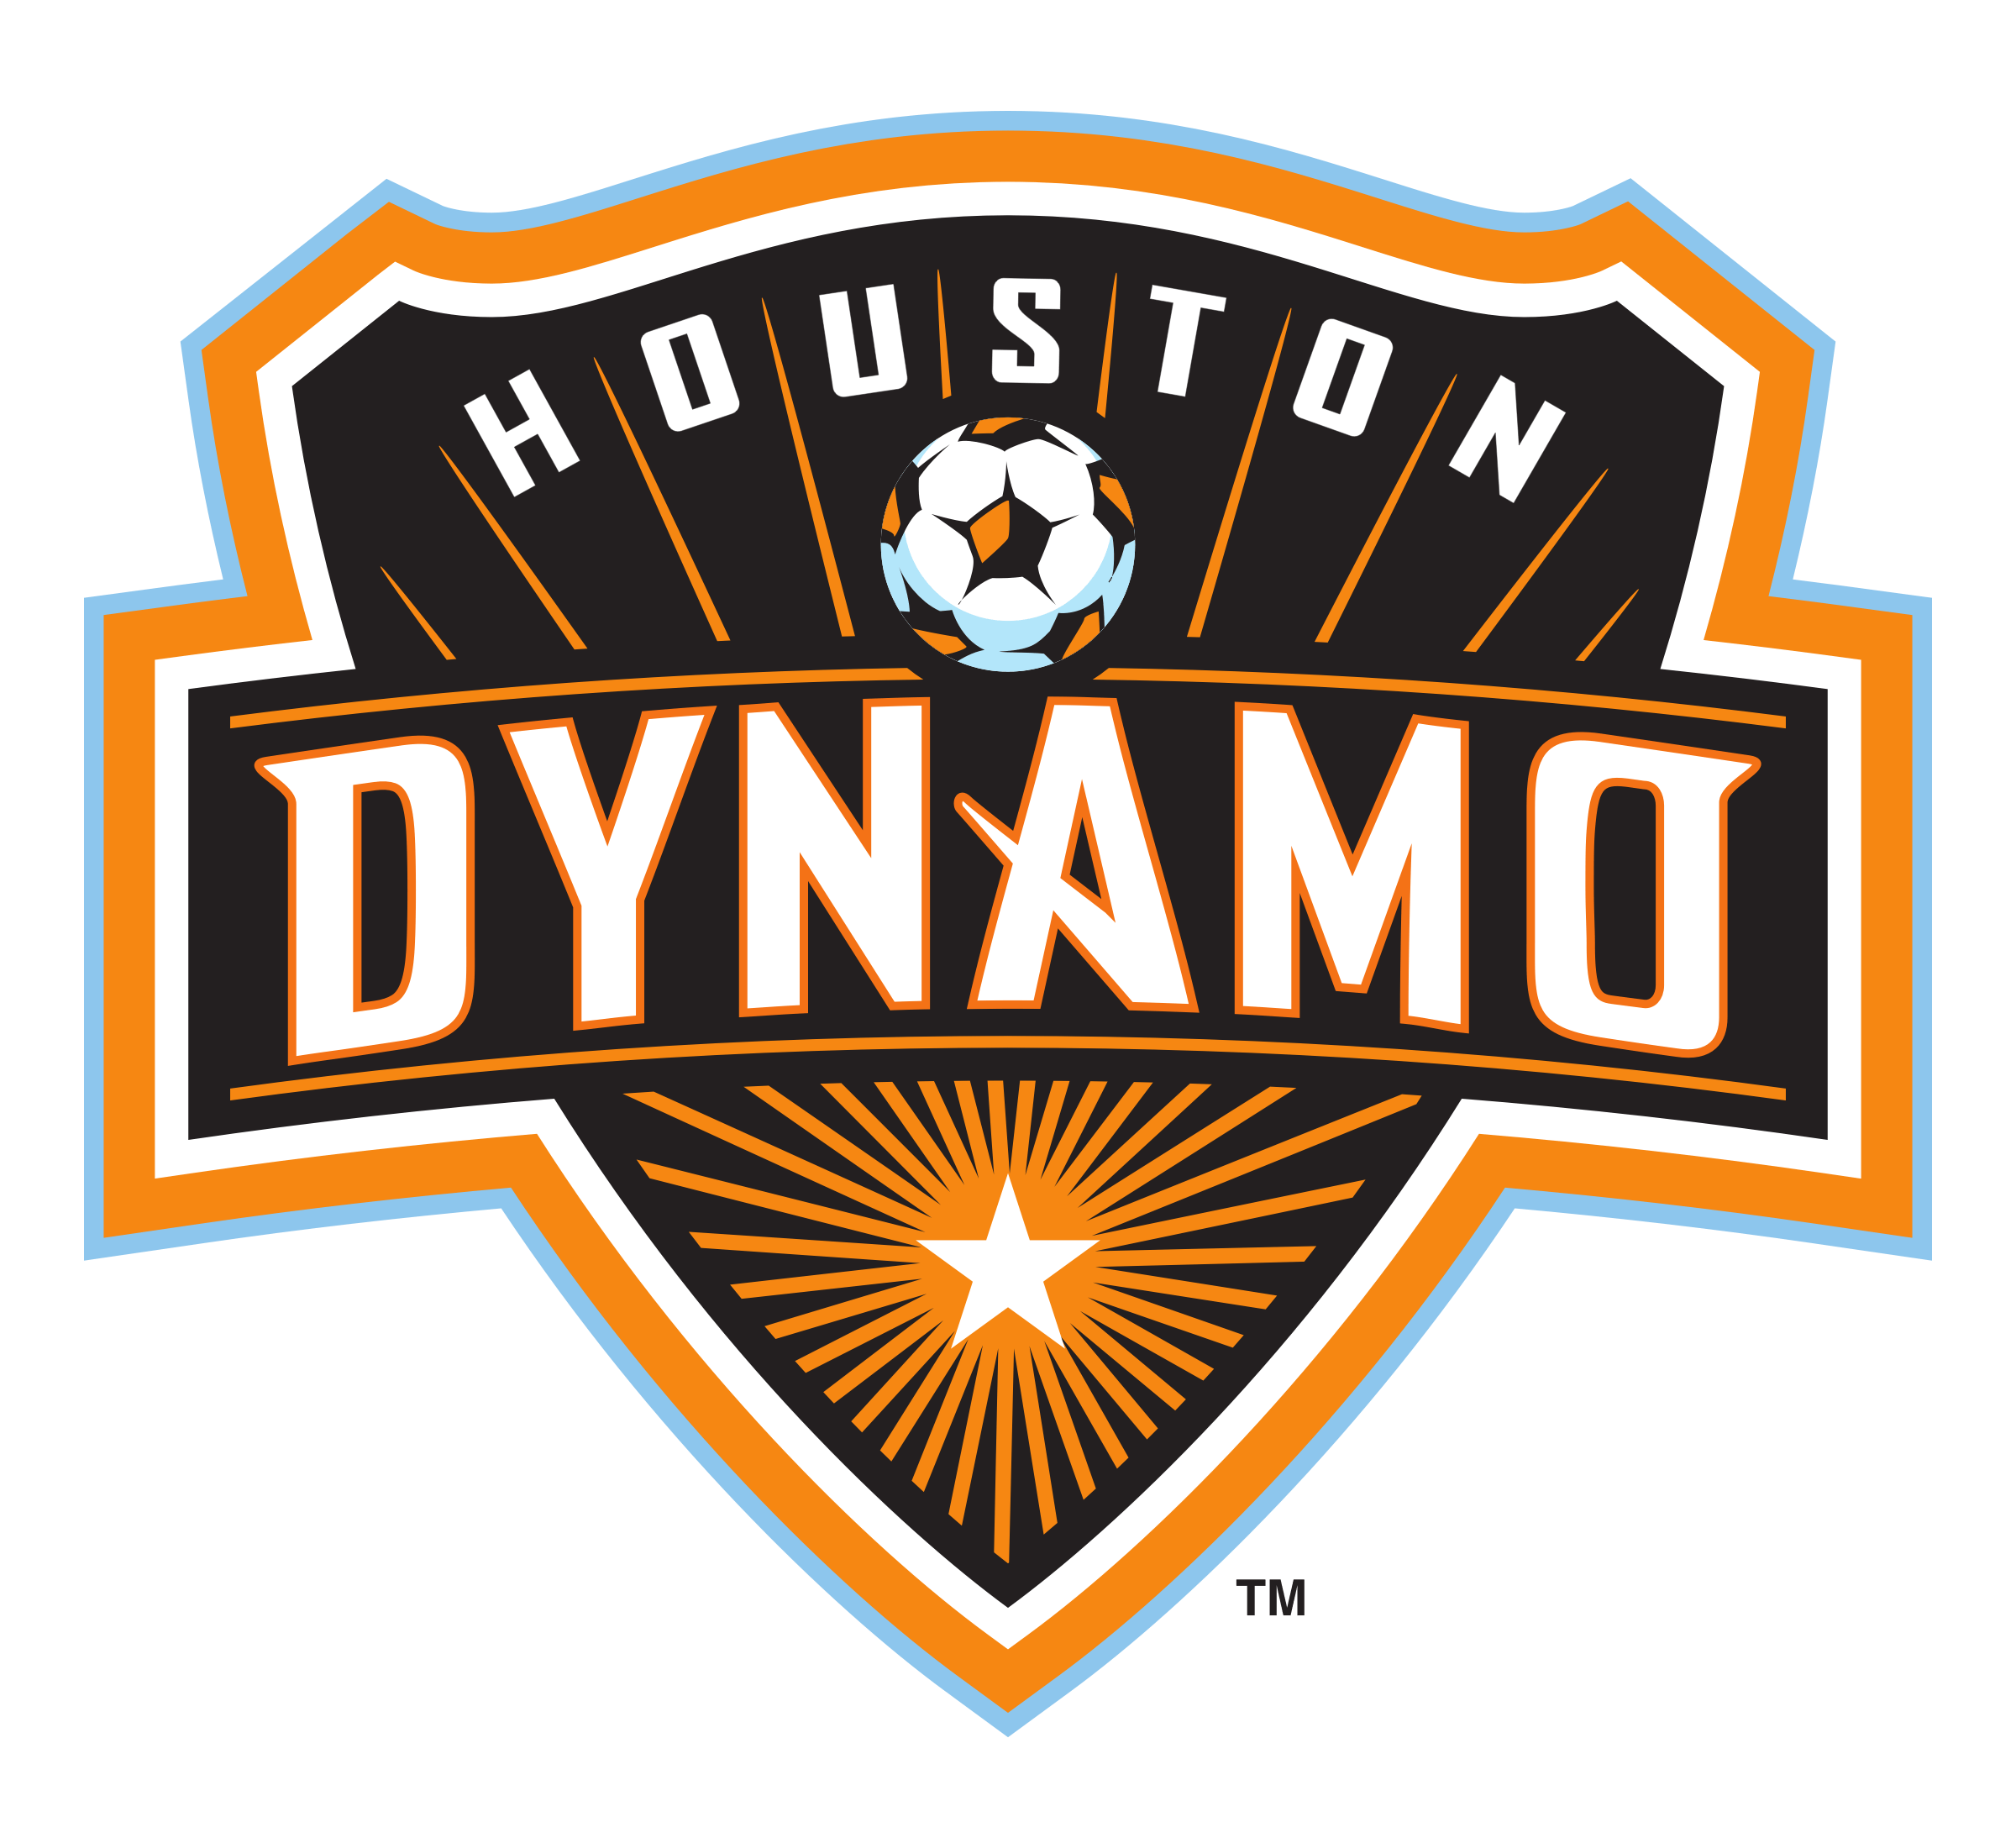 Dynamo Logo - Houston Dynamo Logo PNG Transparent & SVG Vector - Freebie Supply